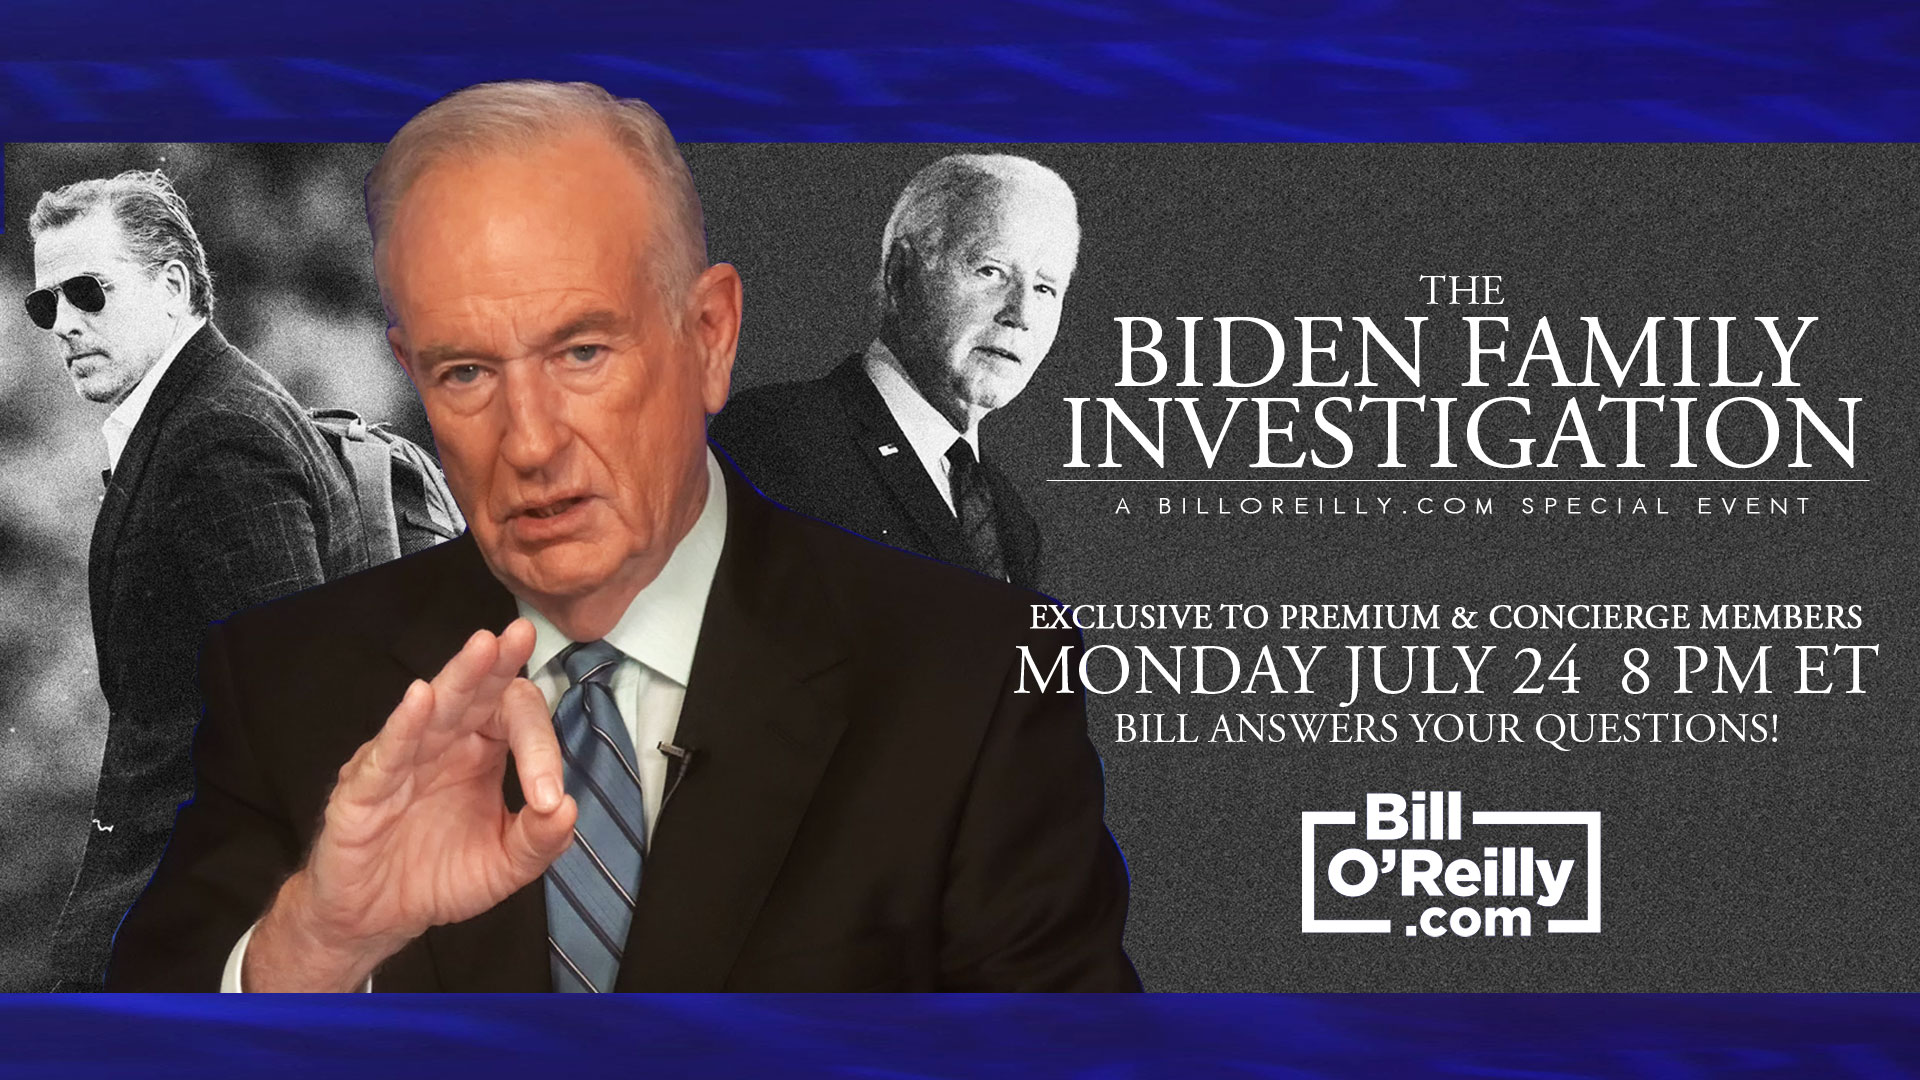 Watch Now: O'Reilly Investigates the Biden Family